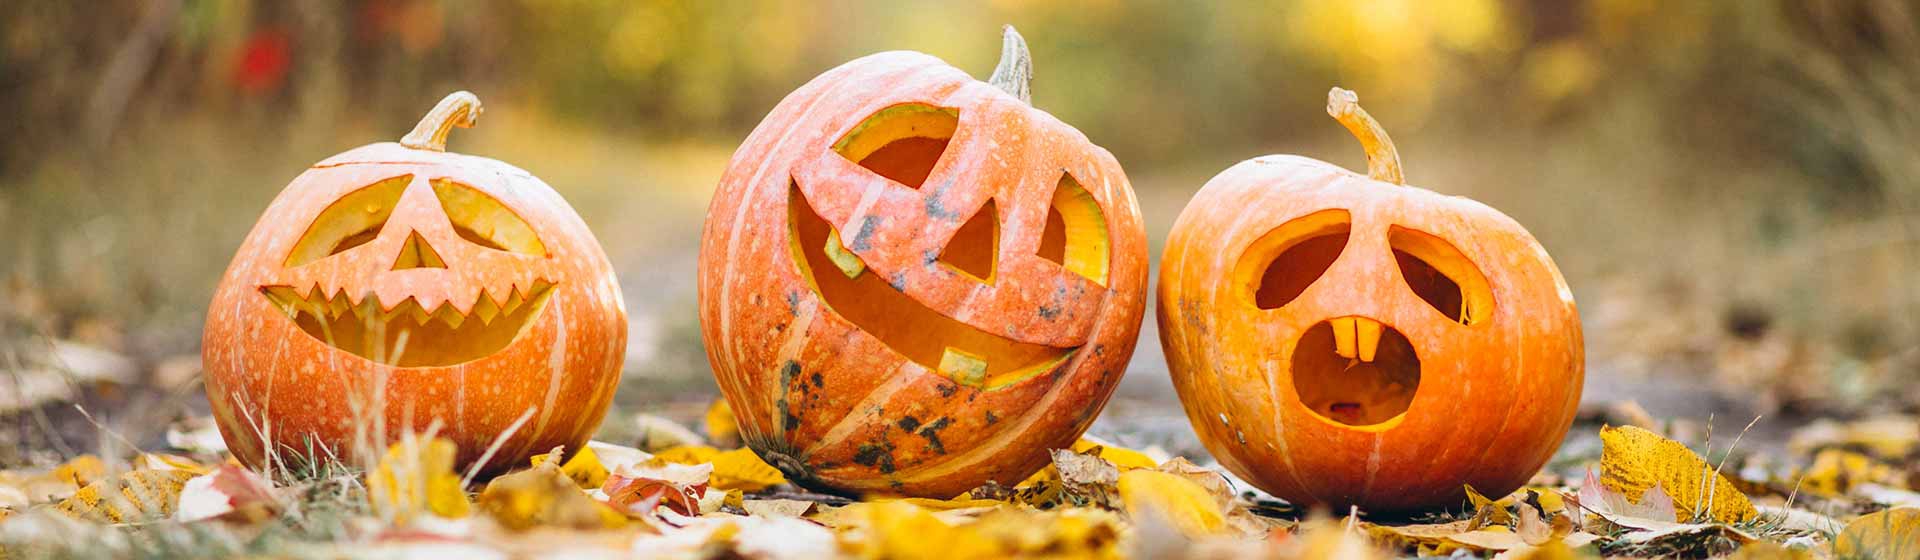 Spooky carved pumpkins